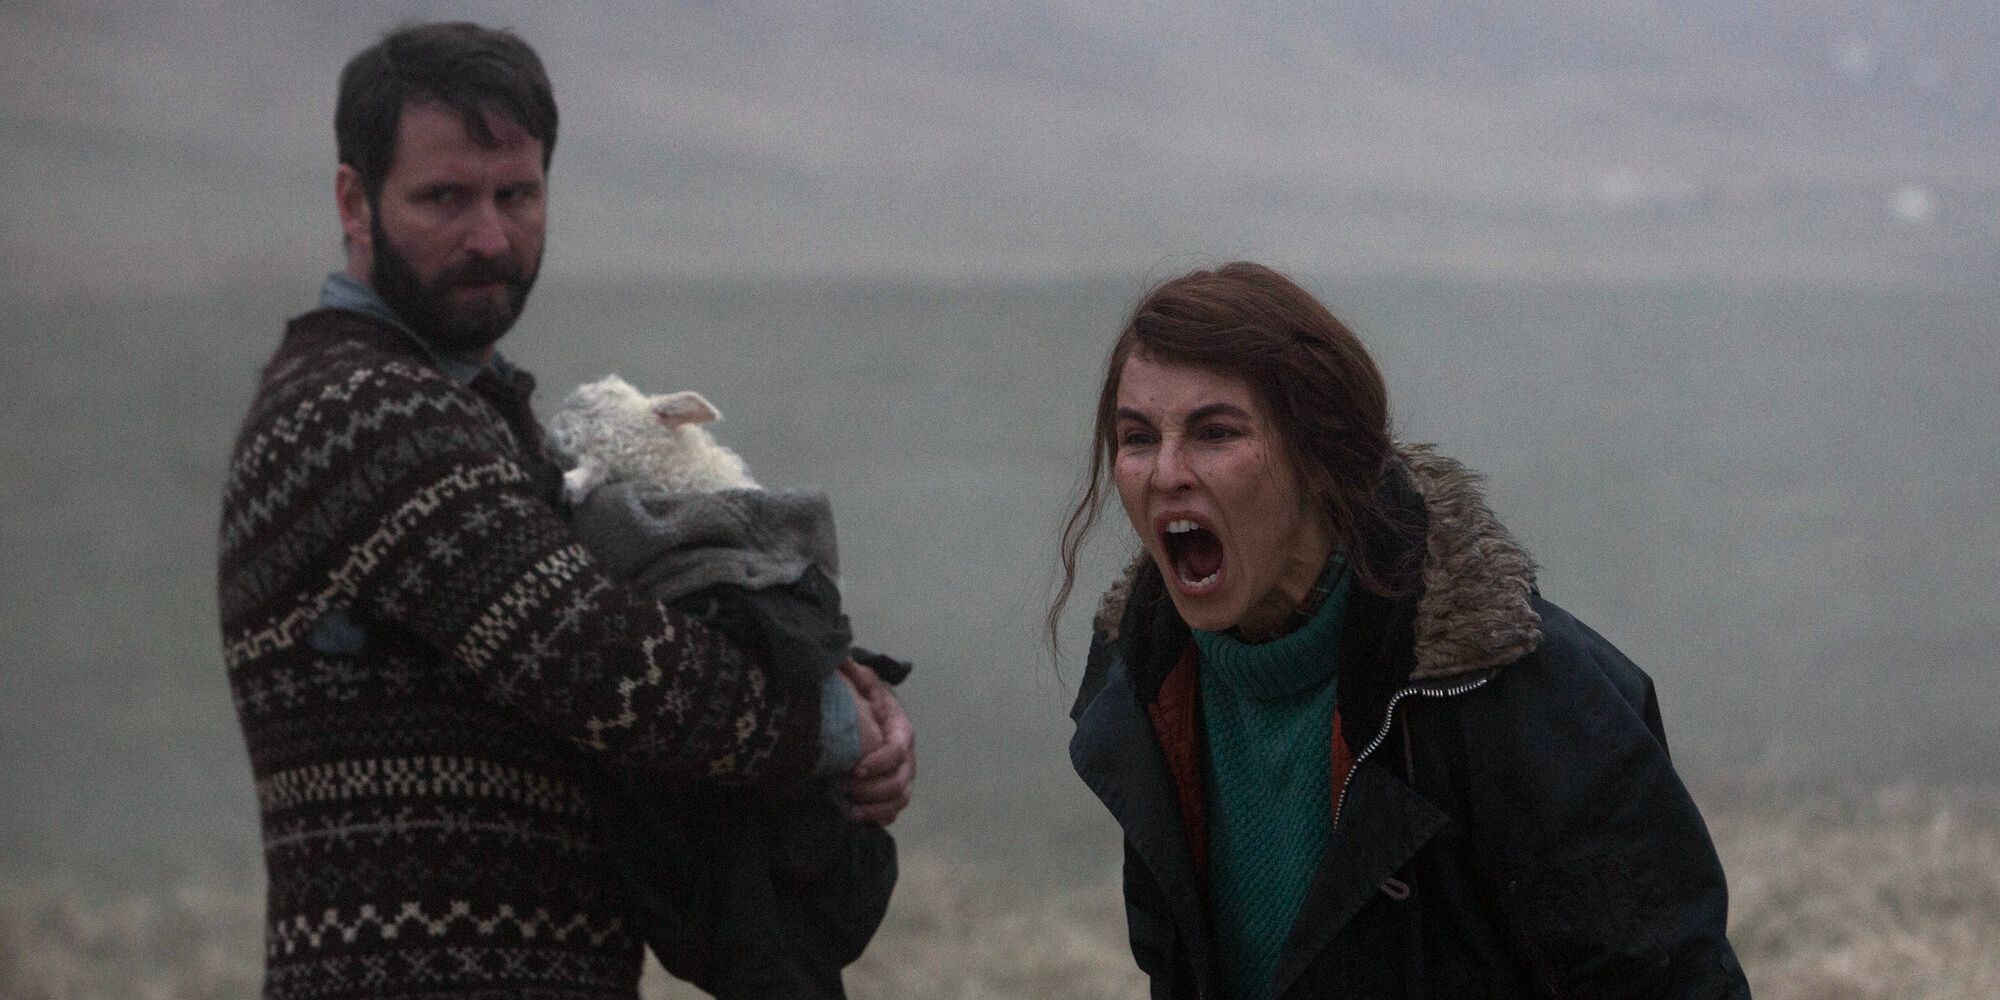 María (Rapace) screams at someone while Ingvar (Guðnason) nurtures their lamb child.